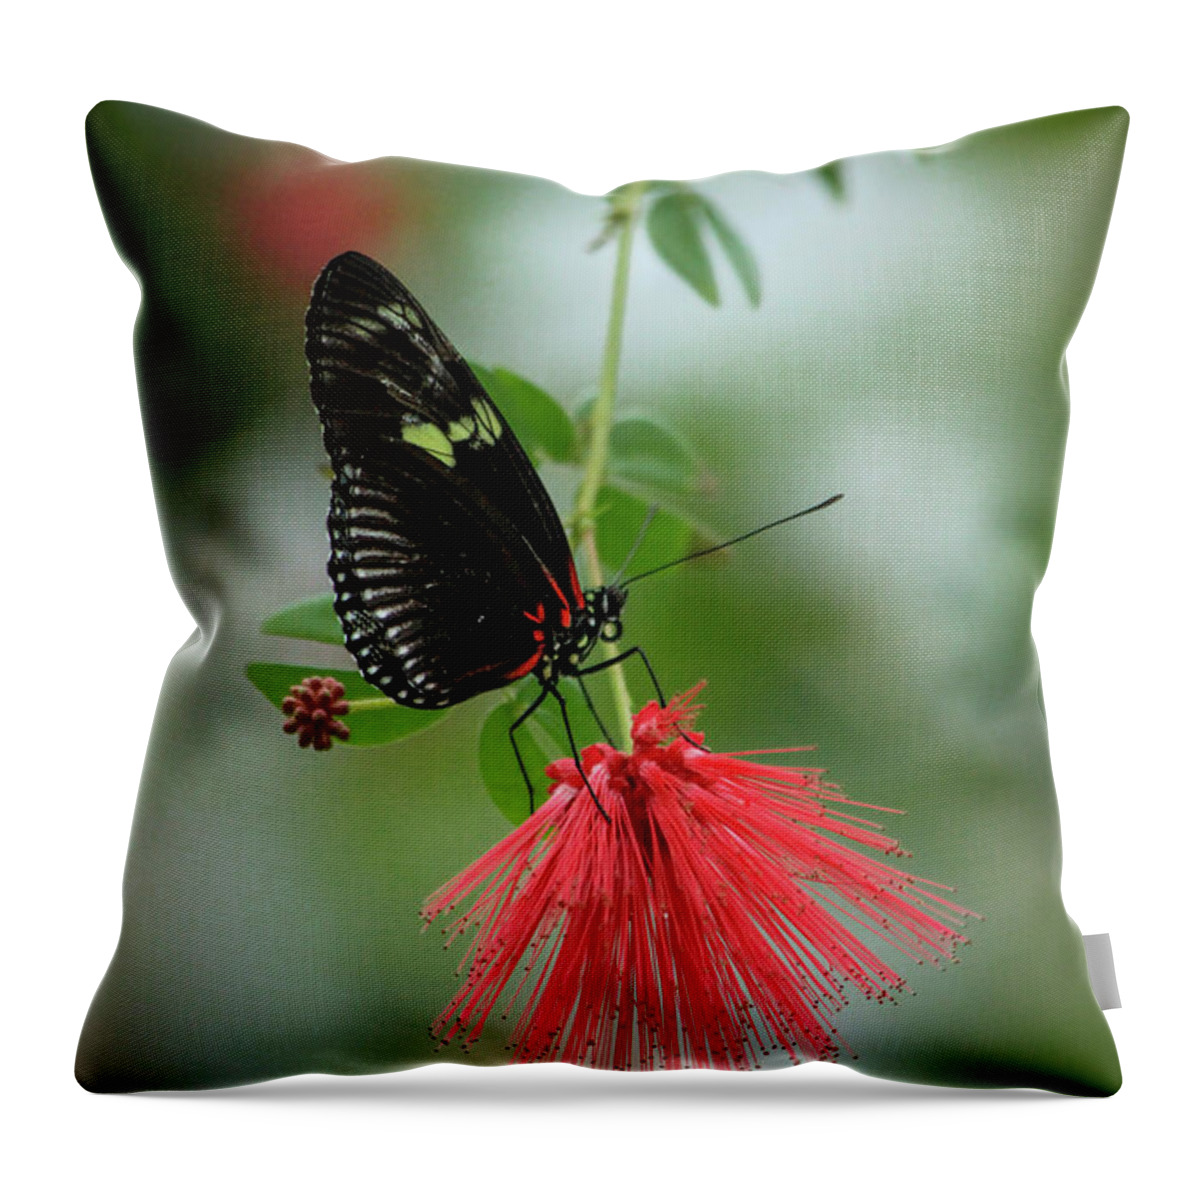 Reid Callaway Elegance Throw Pillow featuring the photograph Elegance Cecil B Day Butterfly Center Art by Reid Callaway